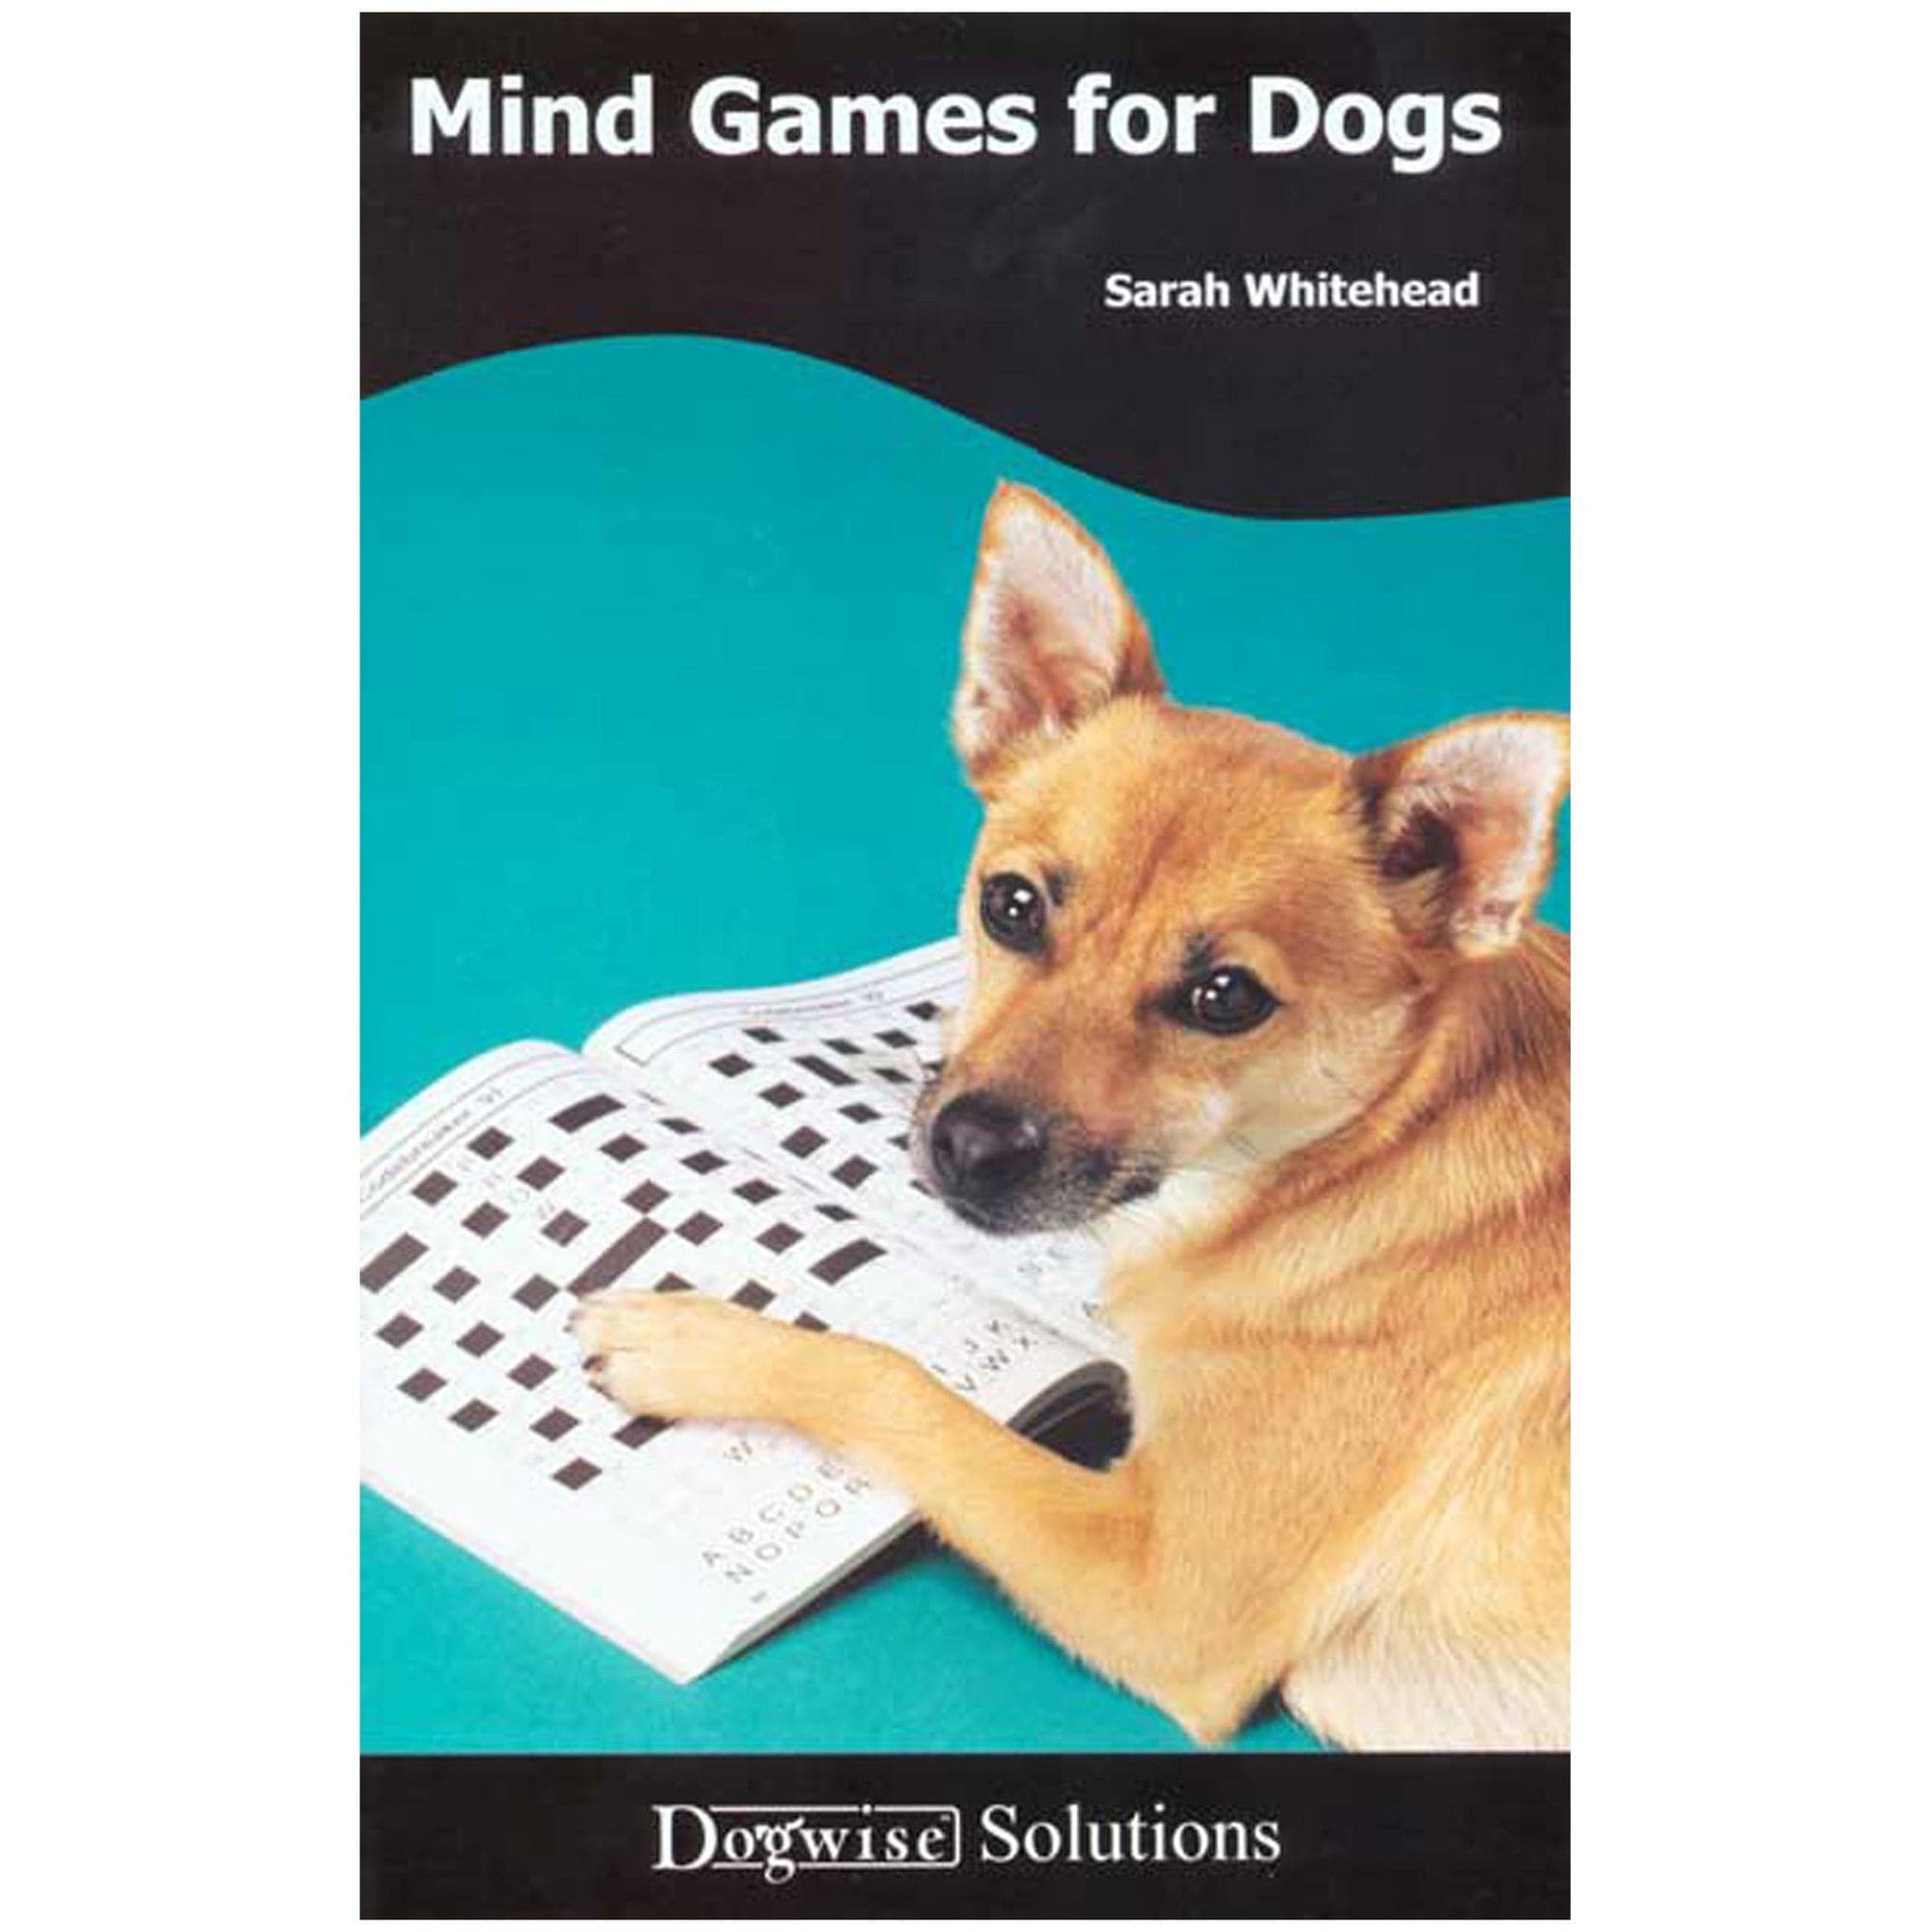 Mind Games for Dogs e-book - Karen Pryor Clicker Training